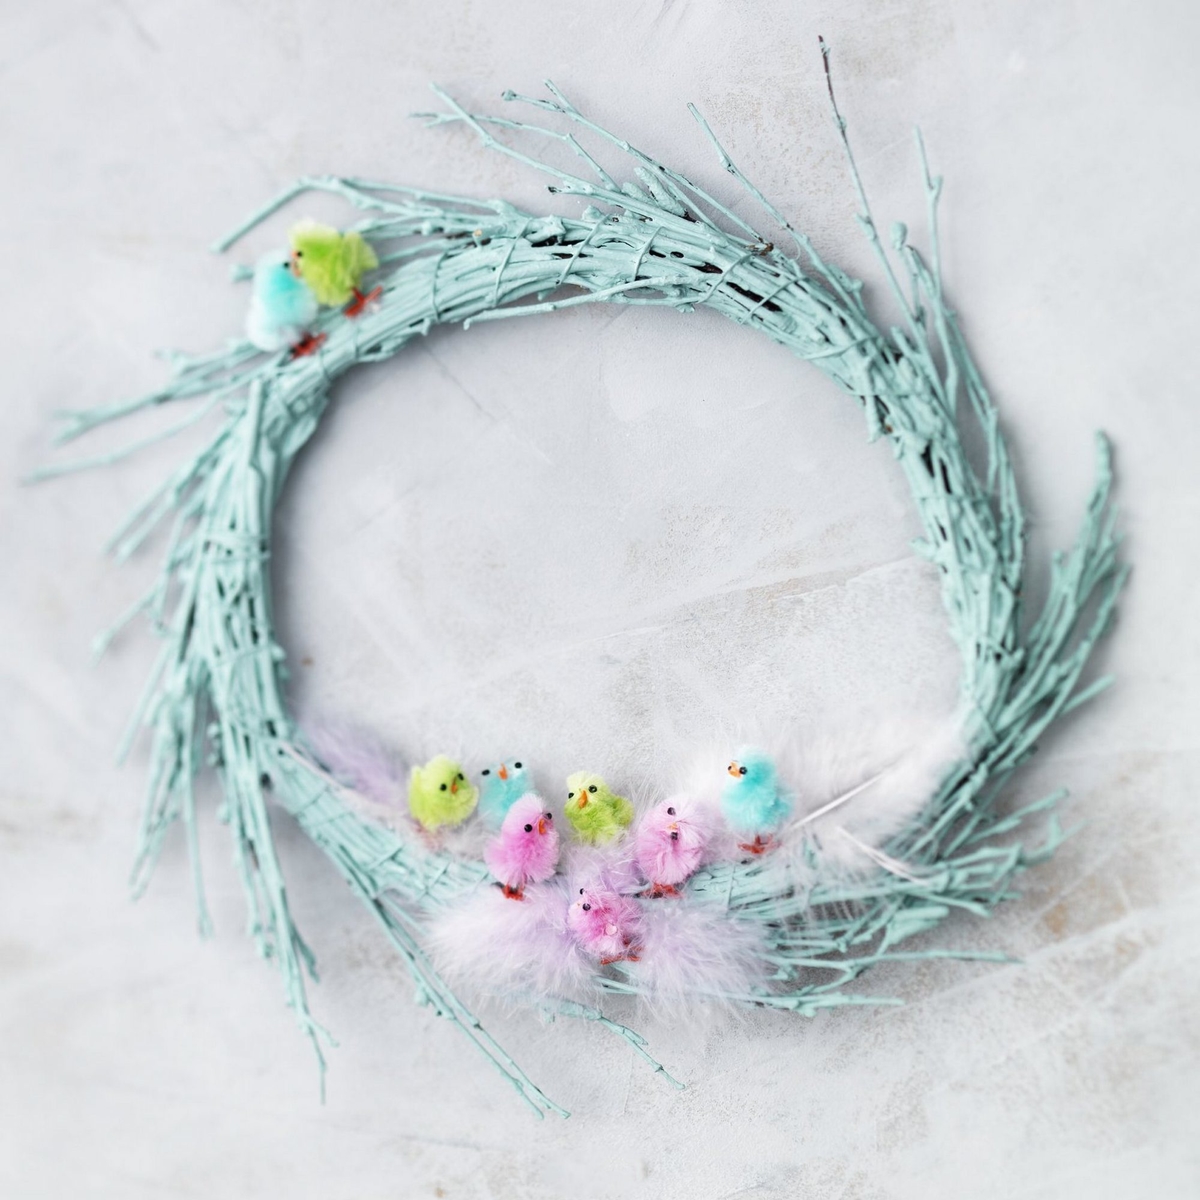 Craft a colourful wreath